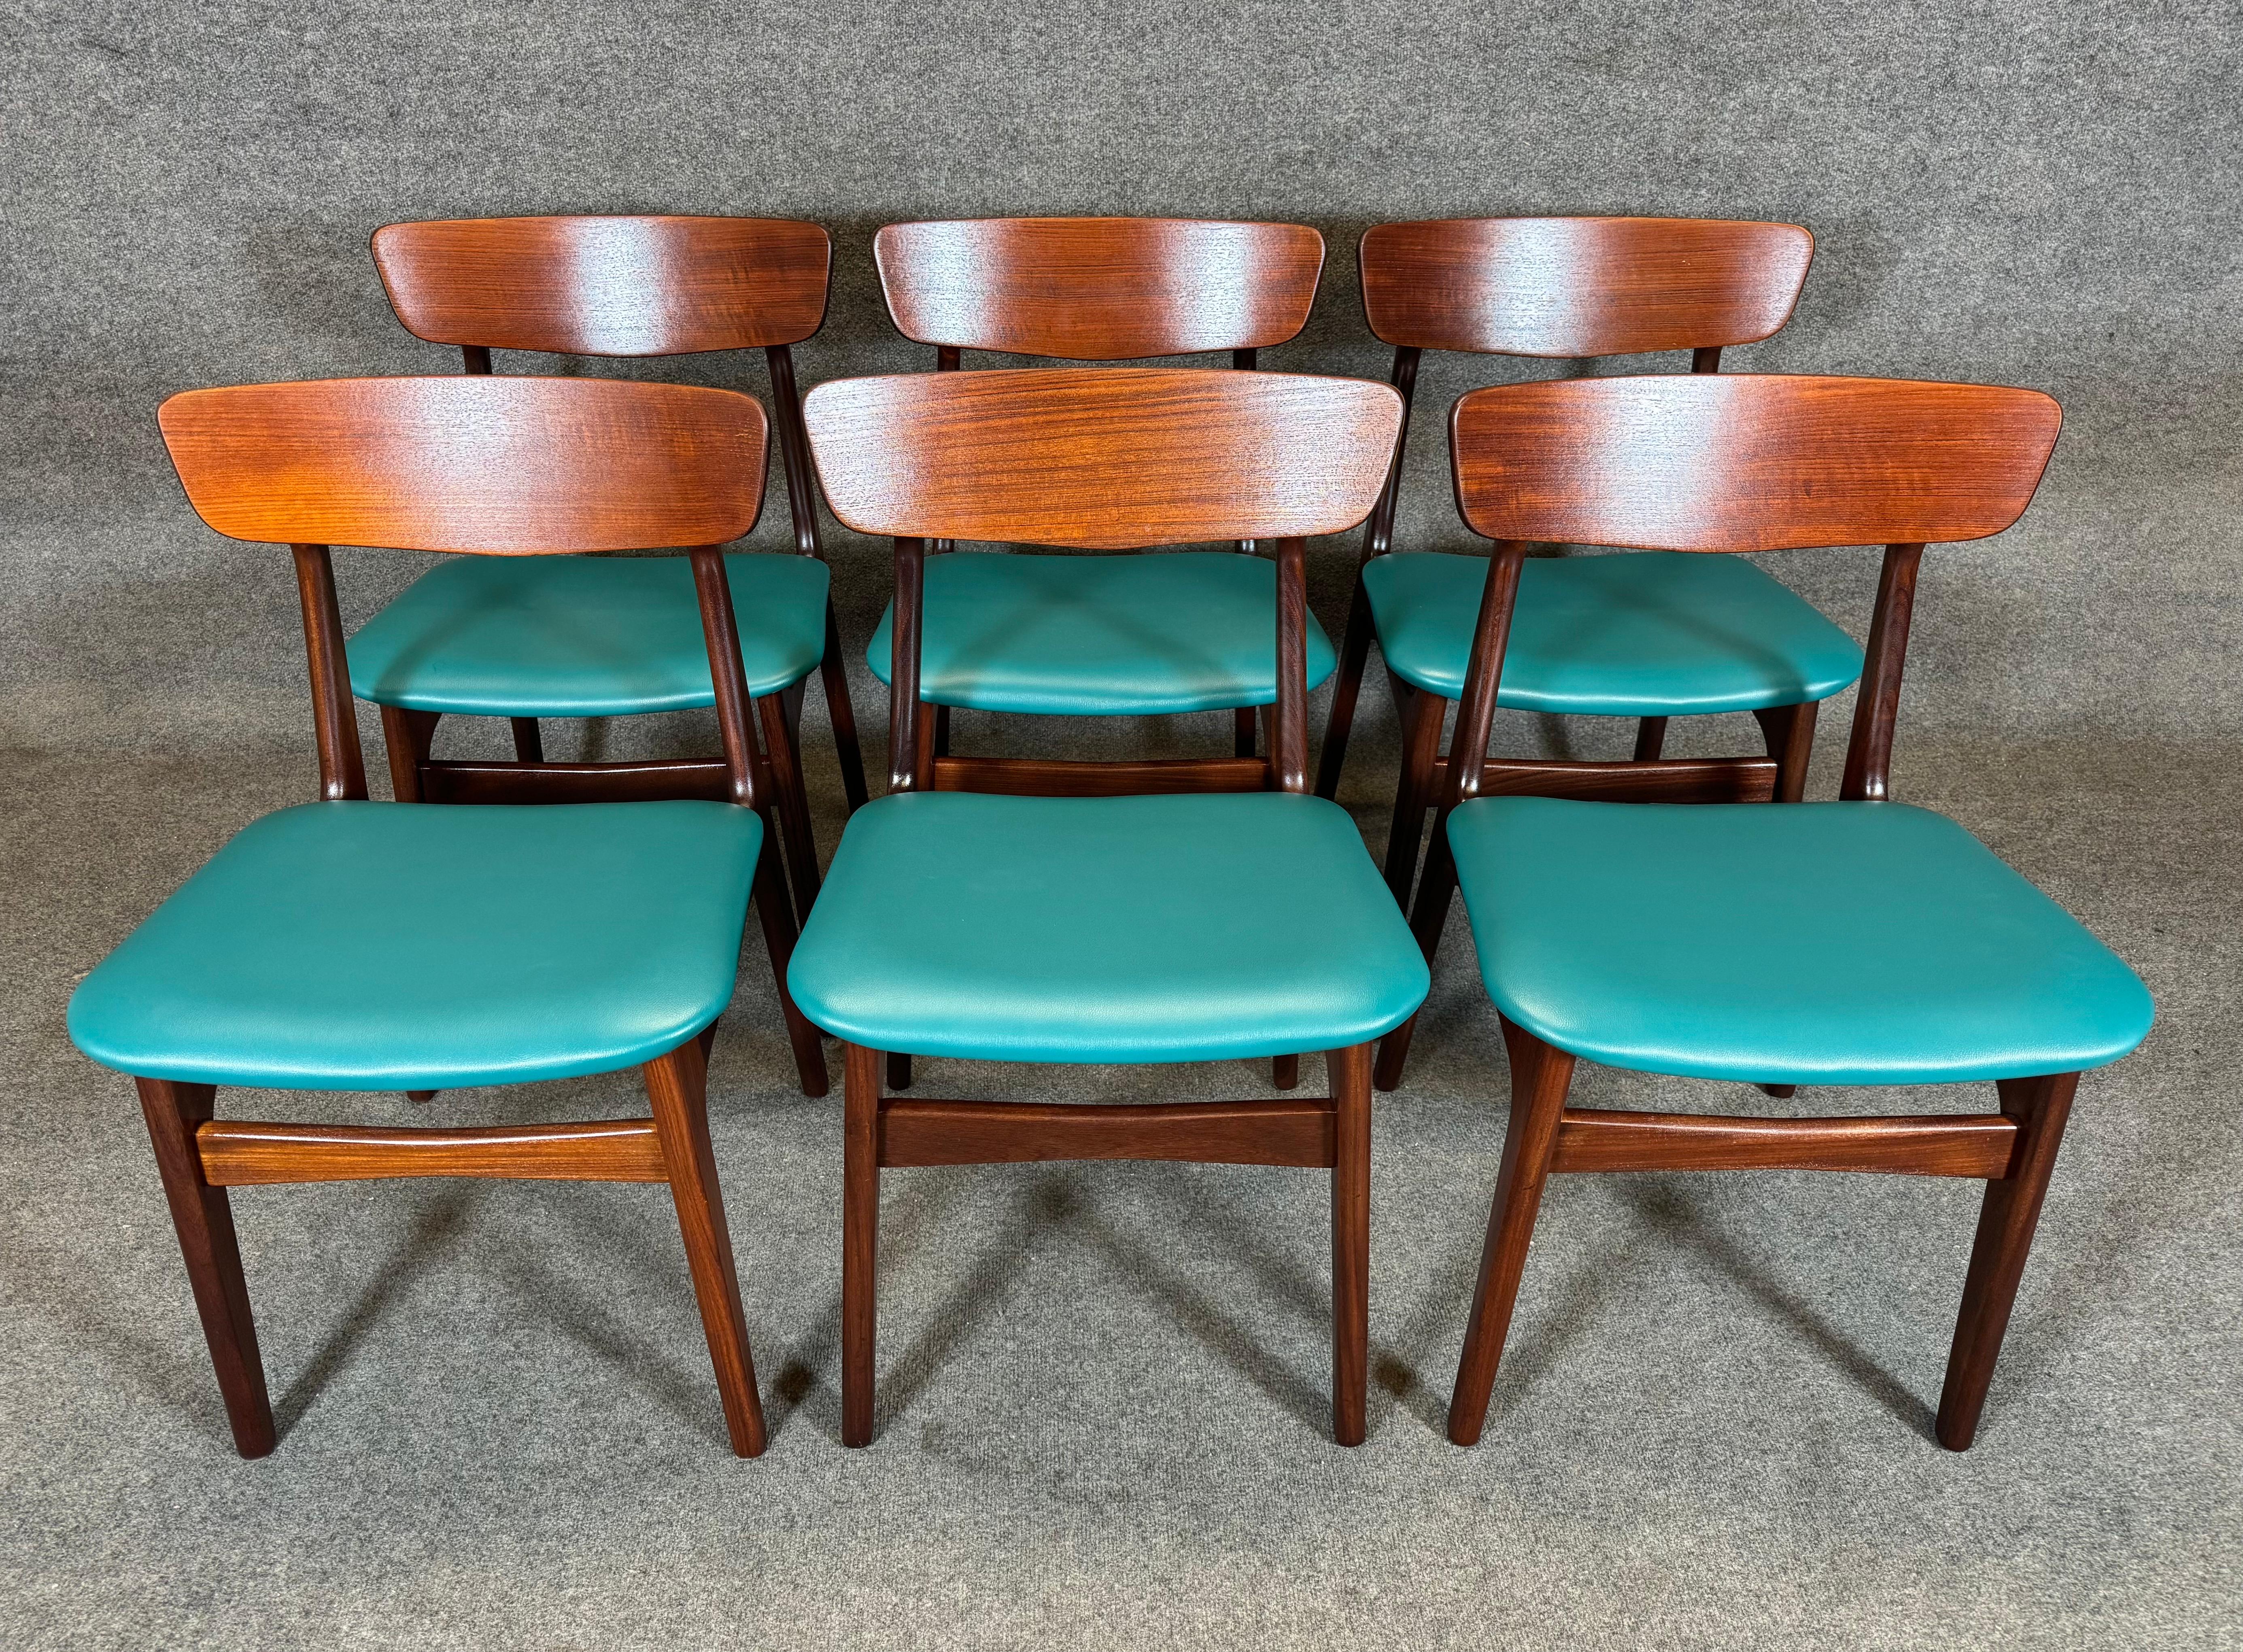 6 Vintage Danish Mid Century Modern Teak Dining Chairs by Schønning & Elgaard For Sale 4